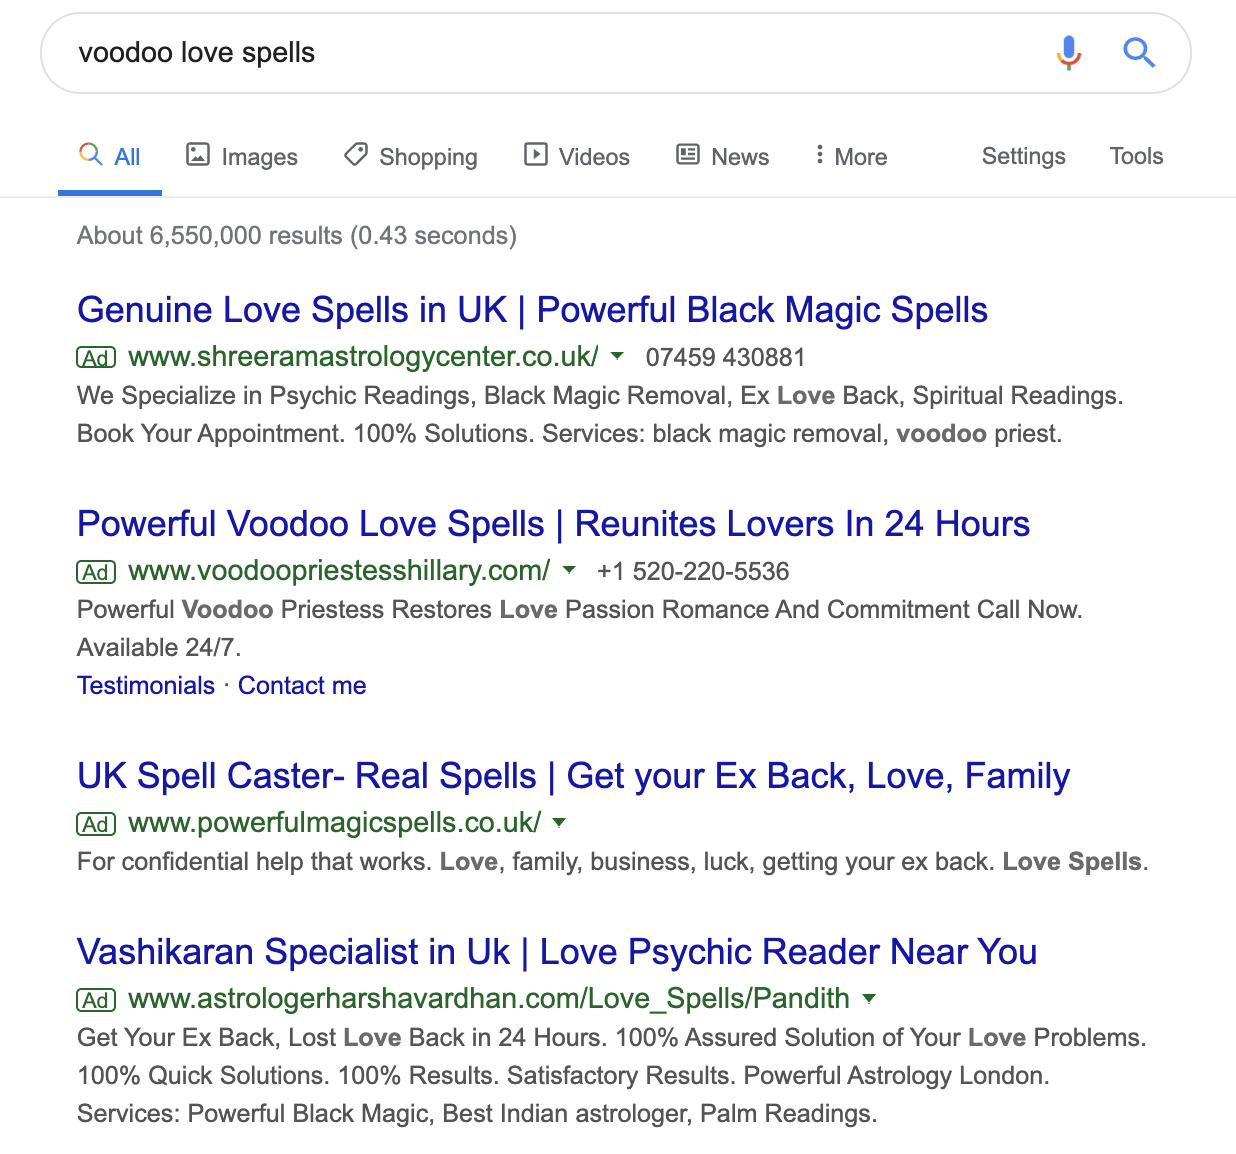 Voodoo Love Spells on Google Ads